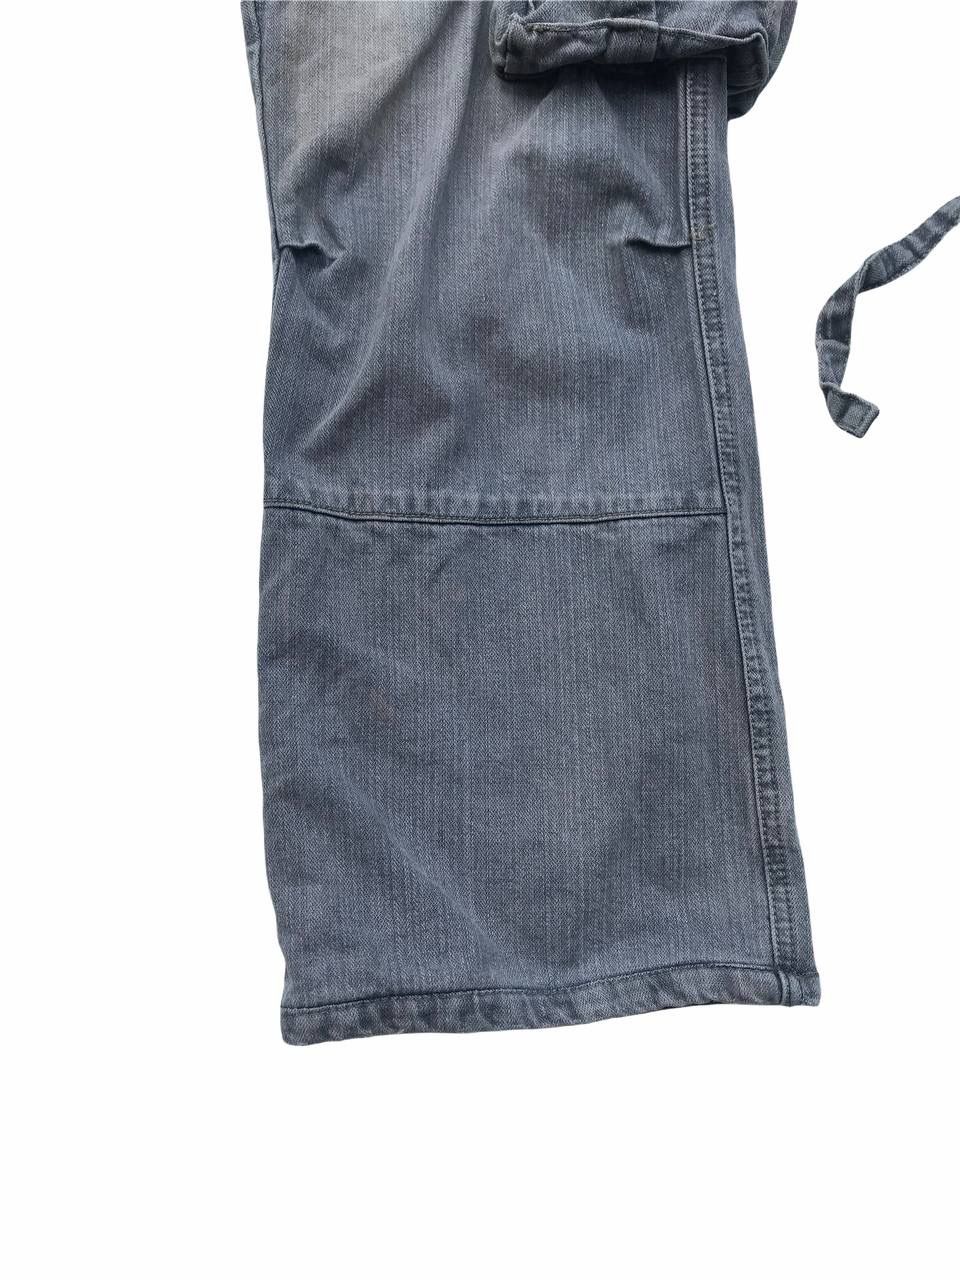 Gstar Gstar Denim Cargo Multipocket Streetwear Fashion Pants Size US 31 - 8 Thumbnail